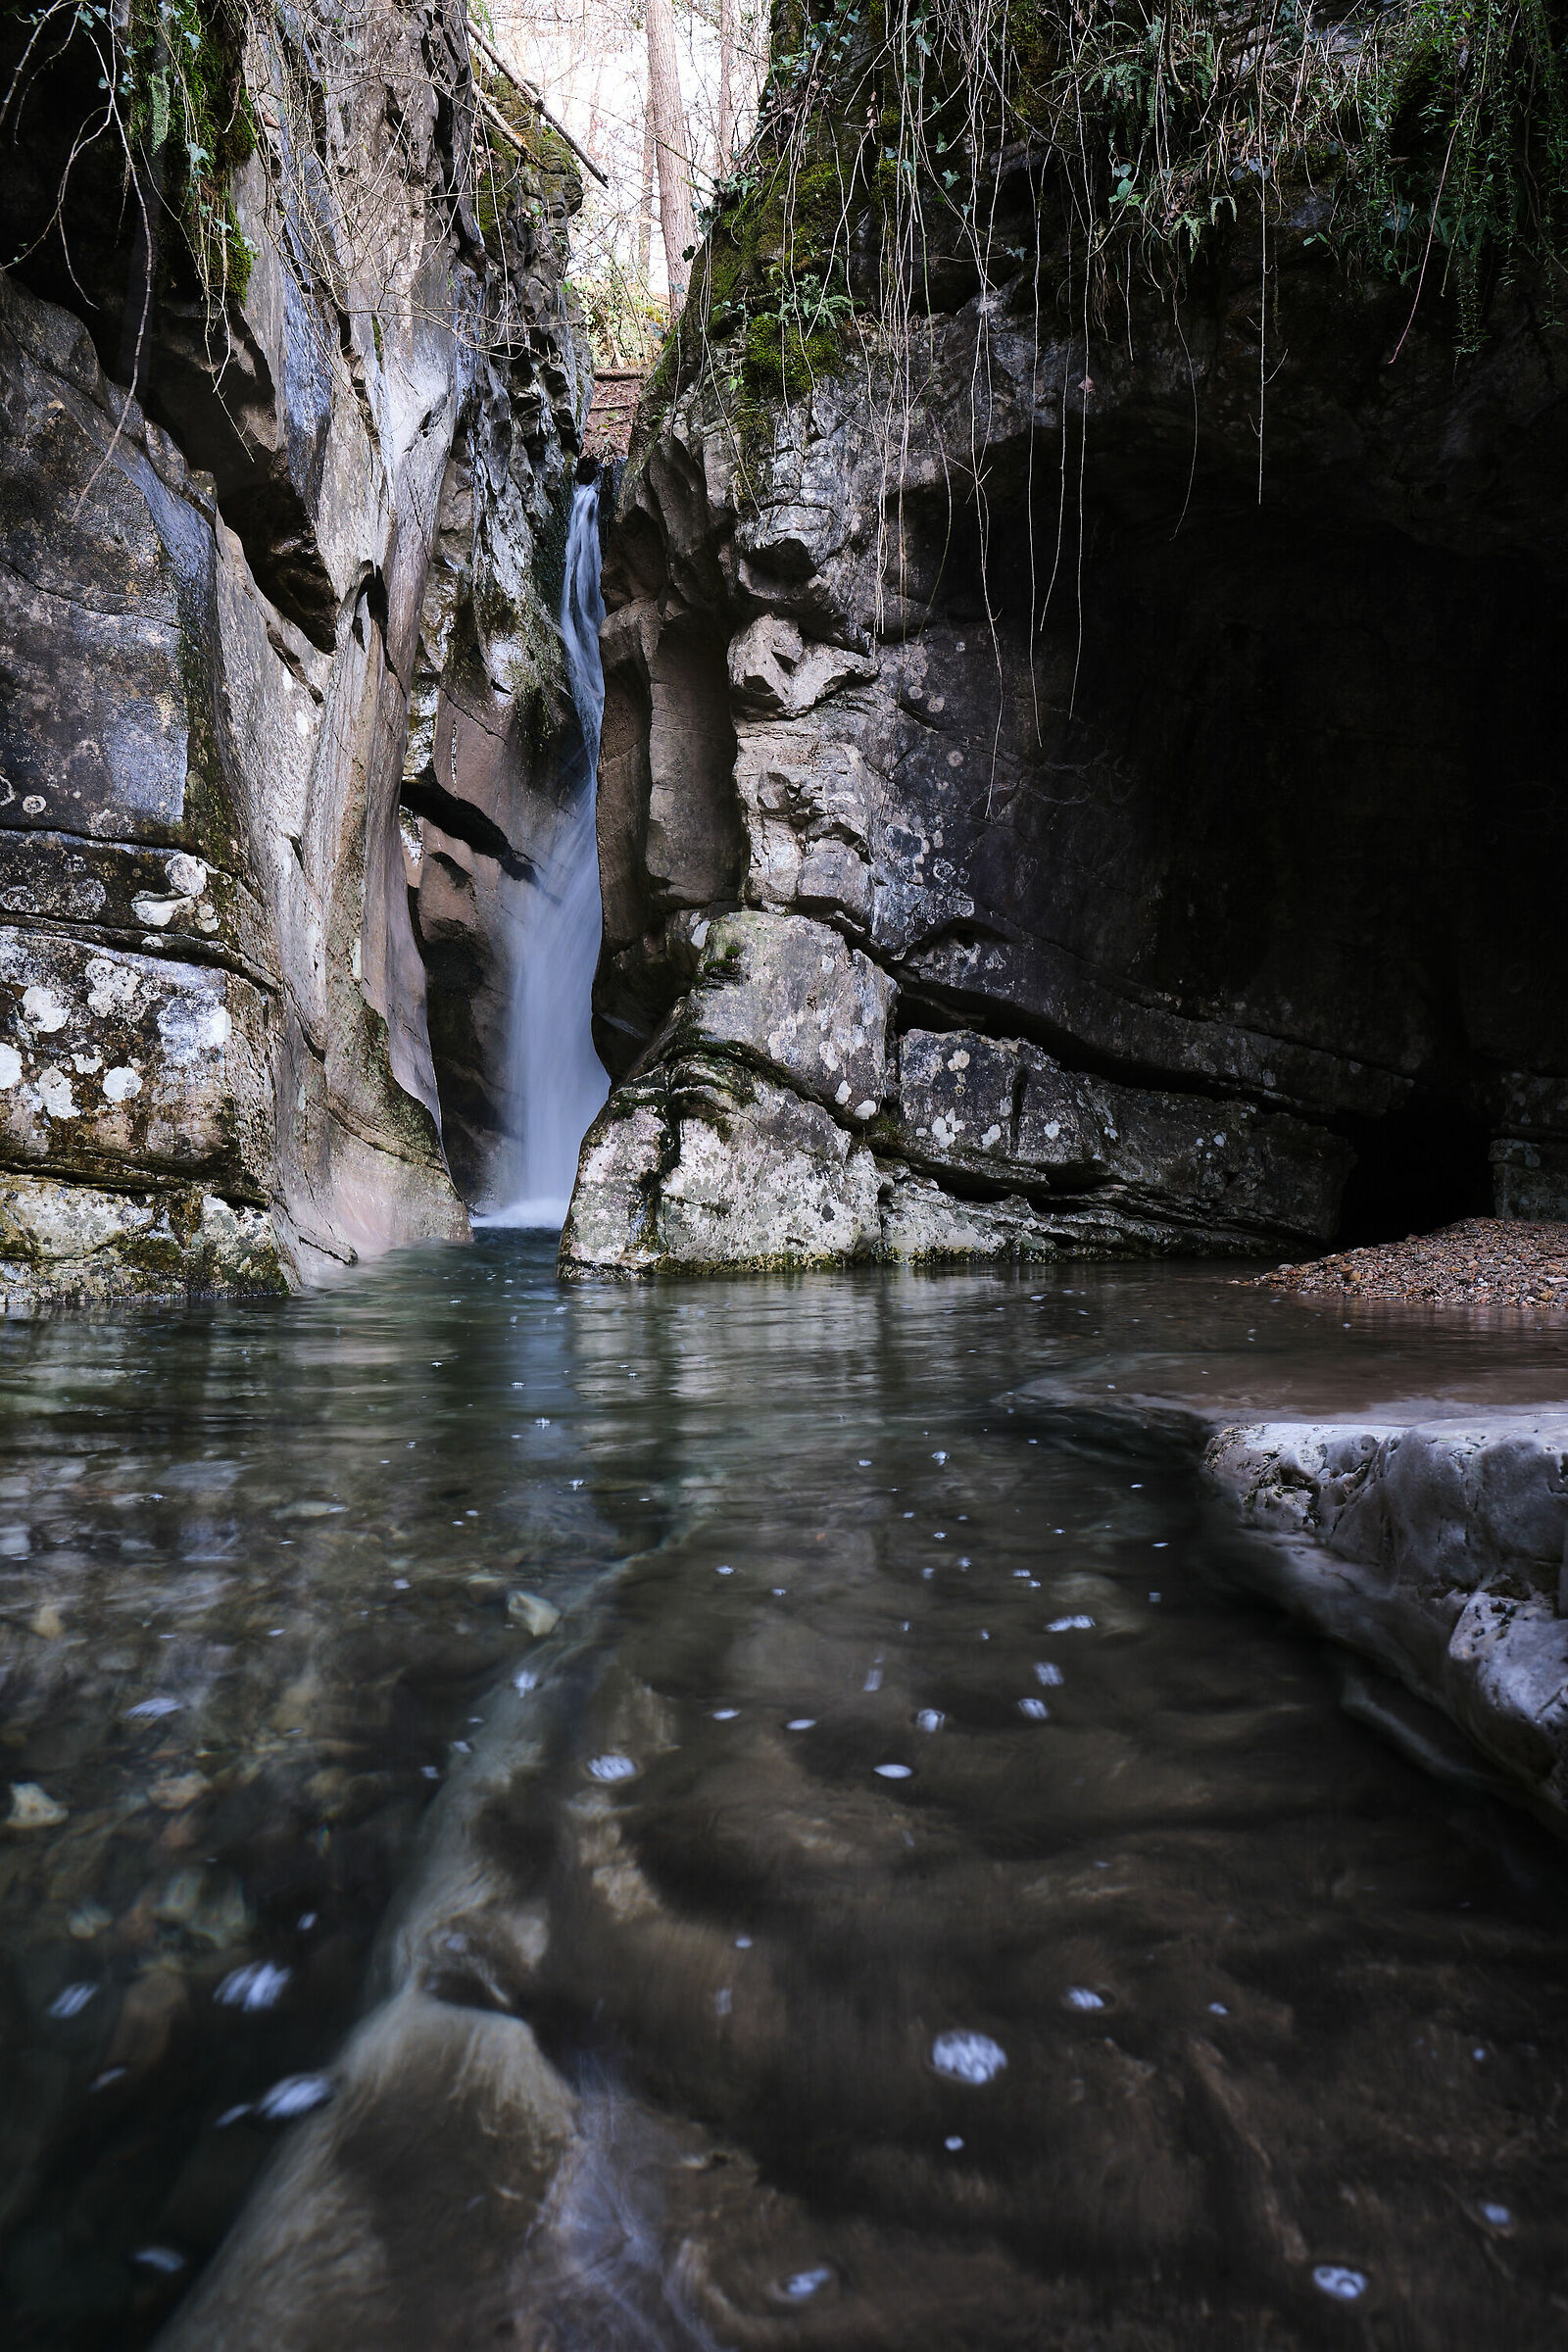 Caves of Ara, in Grignasco (NO)...